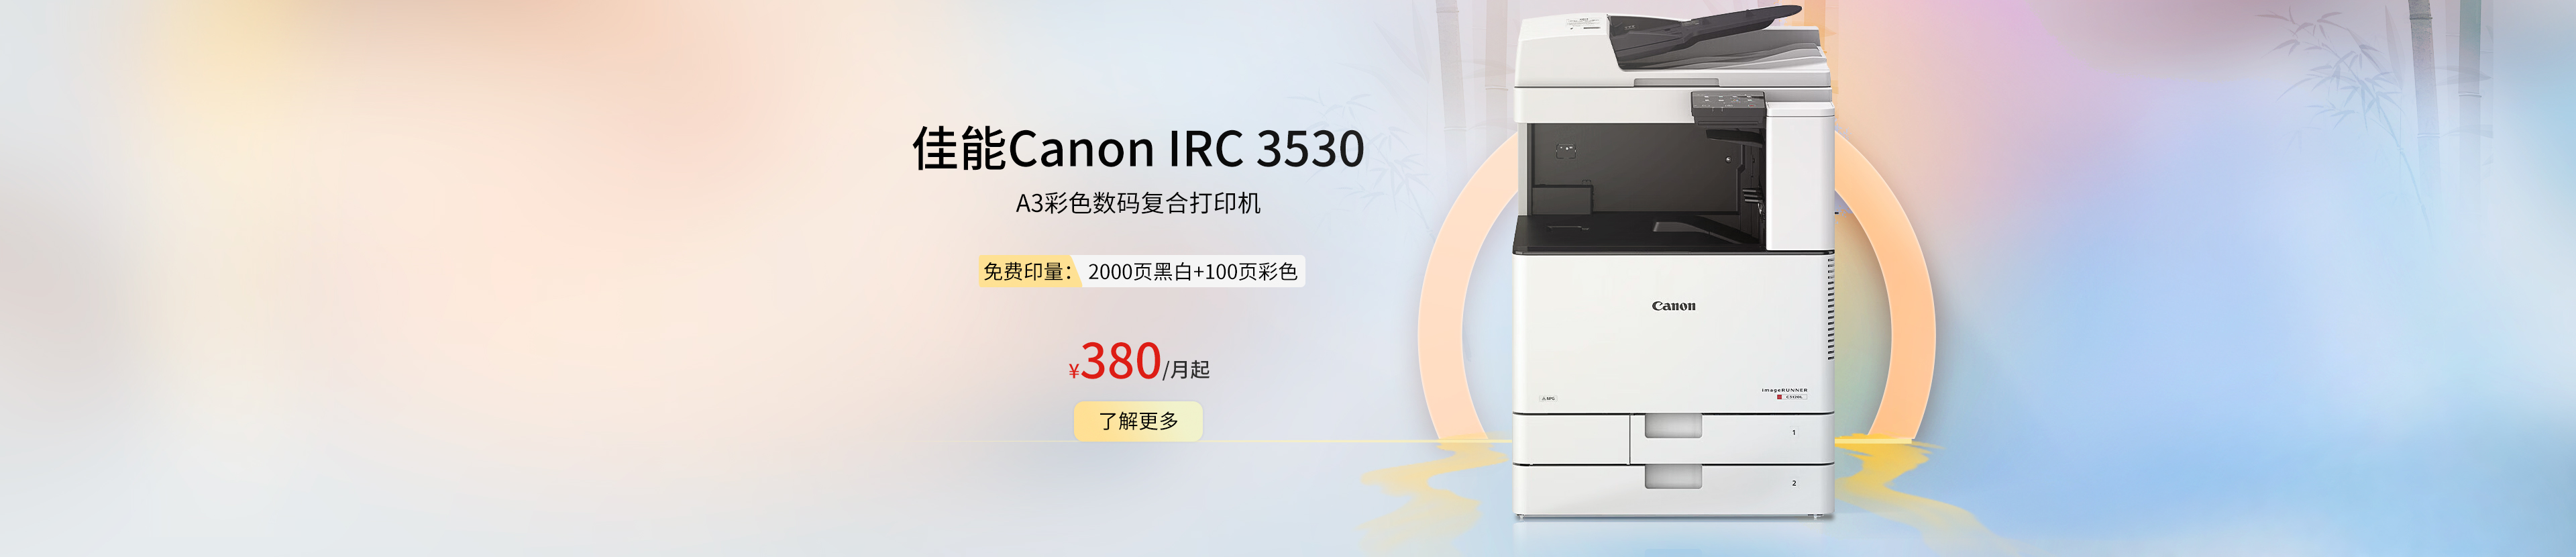 Canon IRC 3530